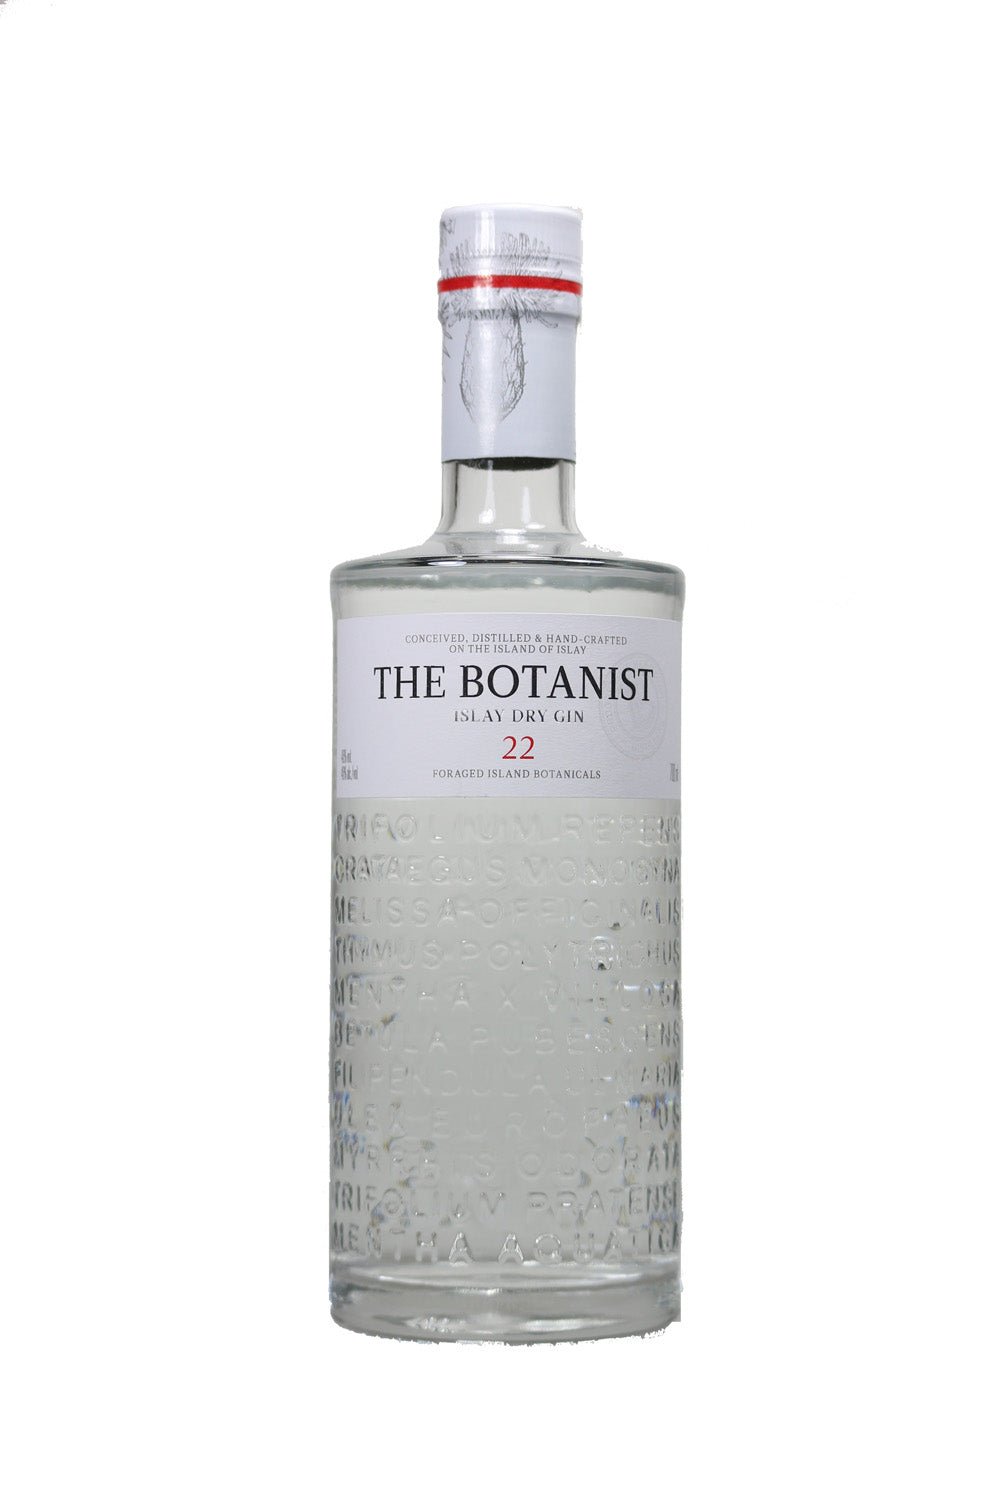 The Botanist Islay Dry Gin by Bruichladdich 46% vol. 700ml - Maltimore